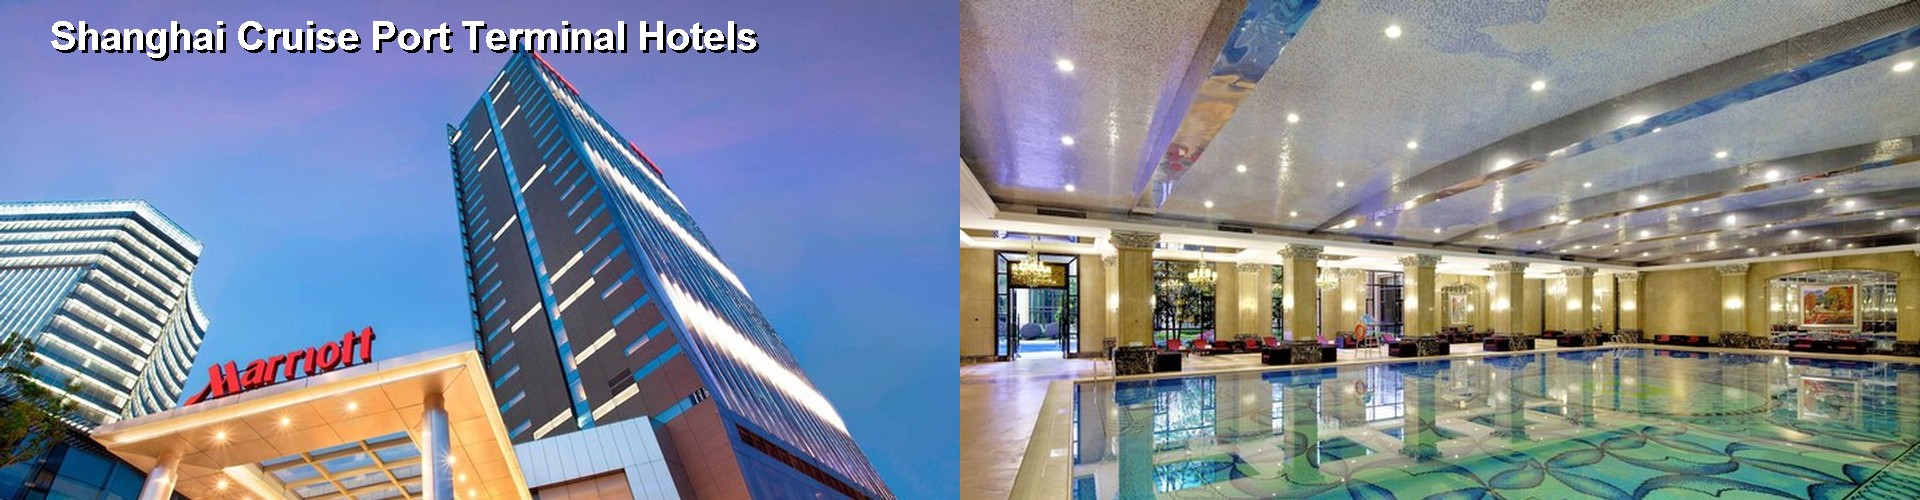 5 Best Hotels near Shanghai Cruise Port Terminal